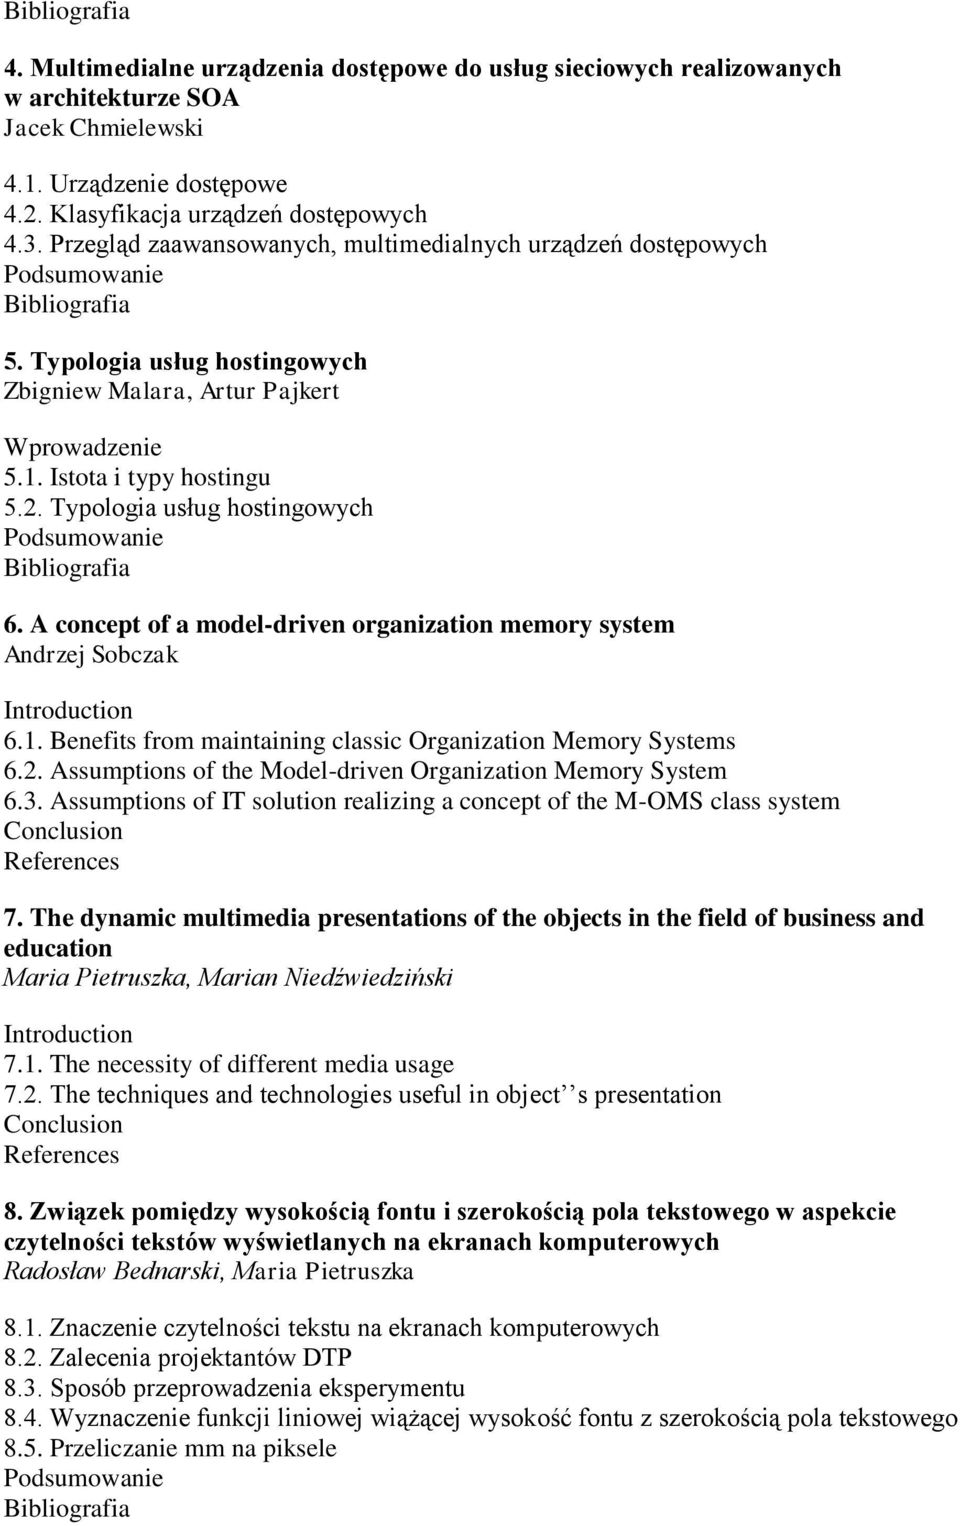 A concept of a model-driven organization memory system Andrzej Sobczak Introduction 6.1. Benefits from maintaining classic Organization Memory Systems 6.2.